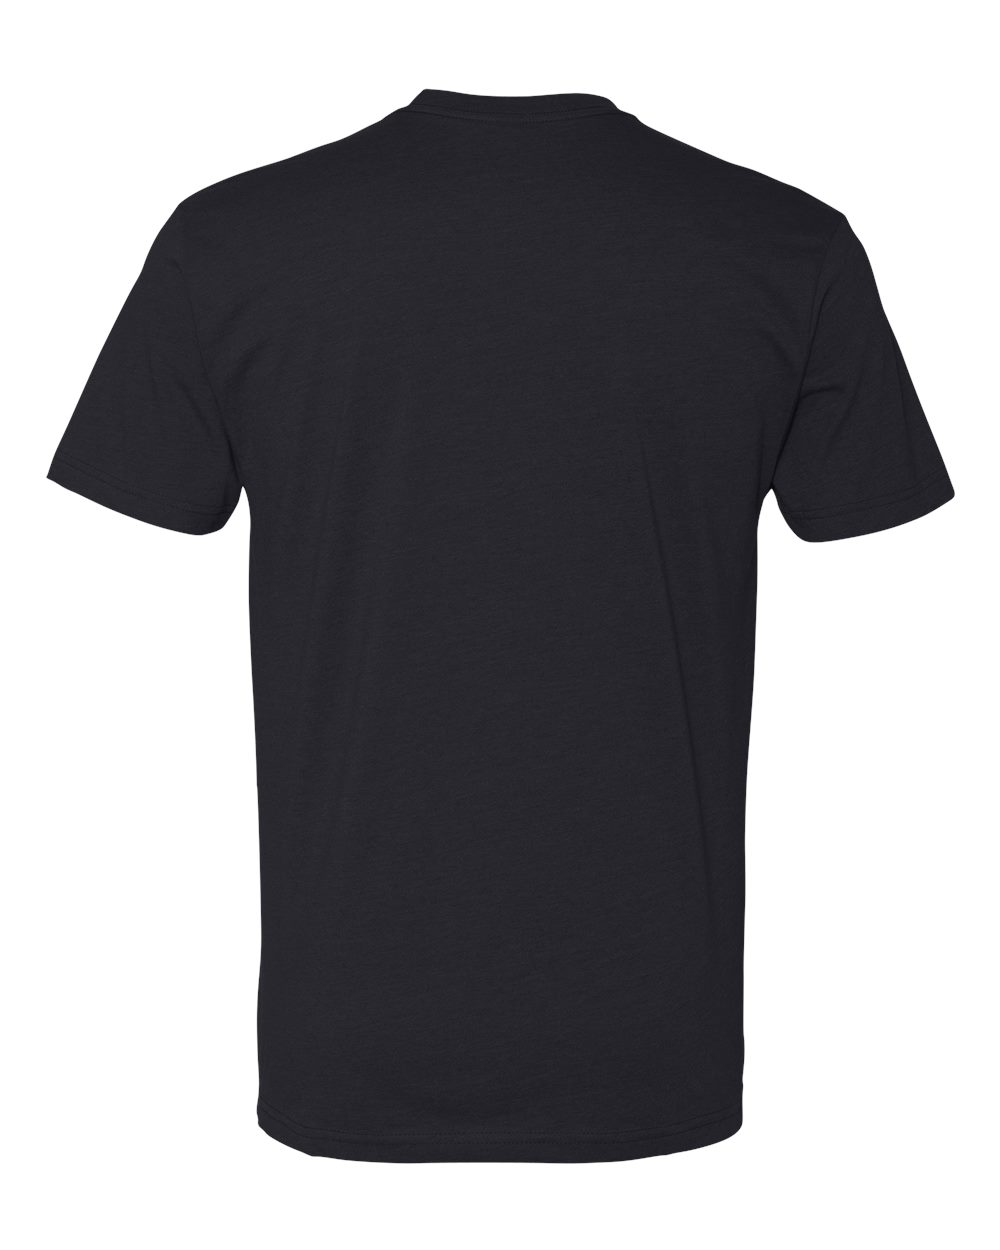 Iowa Hawkeye Black T Shirt Back